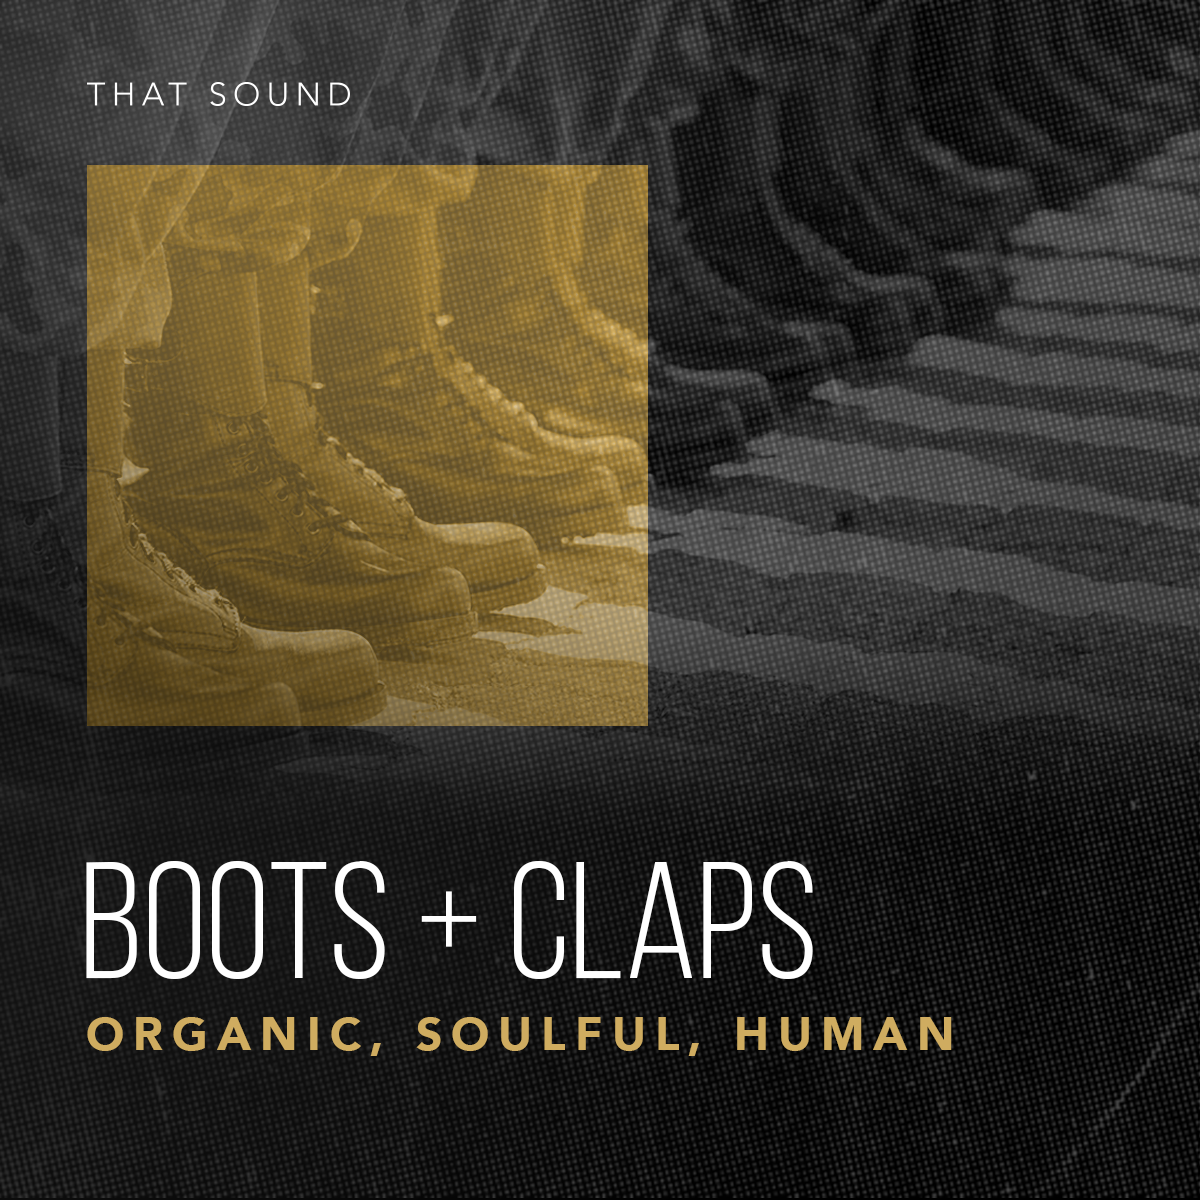 Boots + Claps